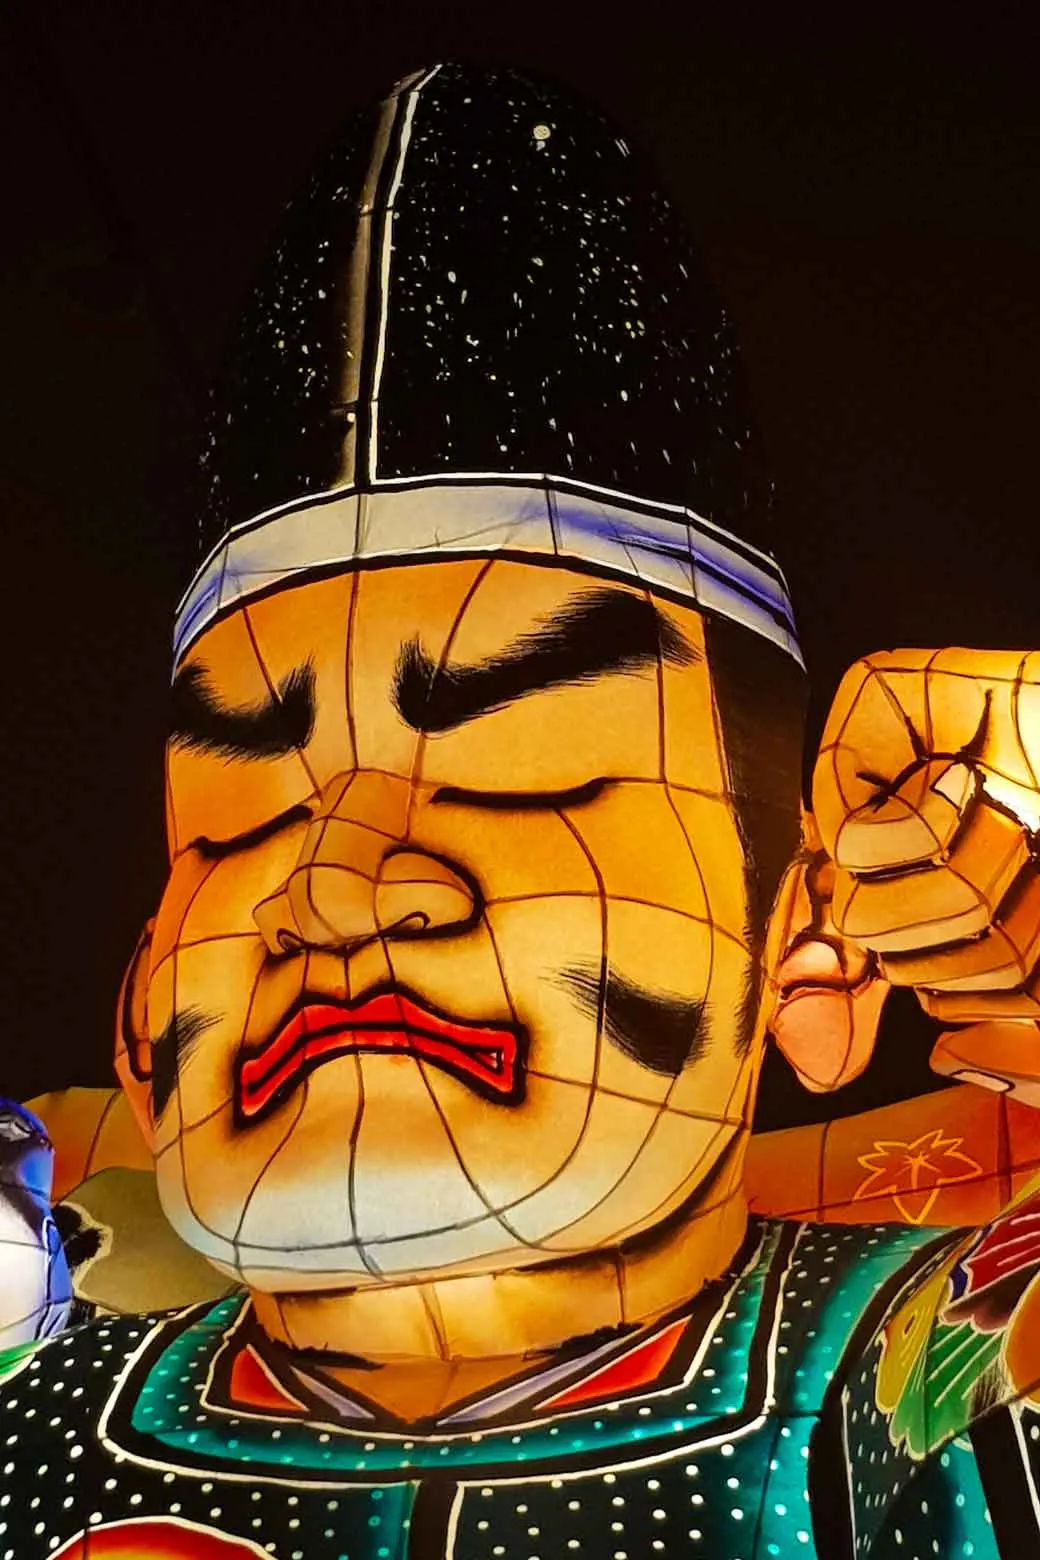 Festival lantern from Aomori's Nebuta celebrations